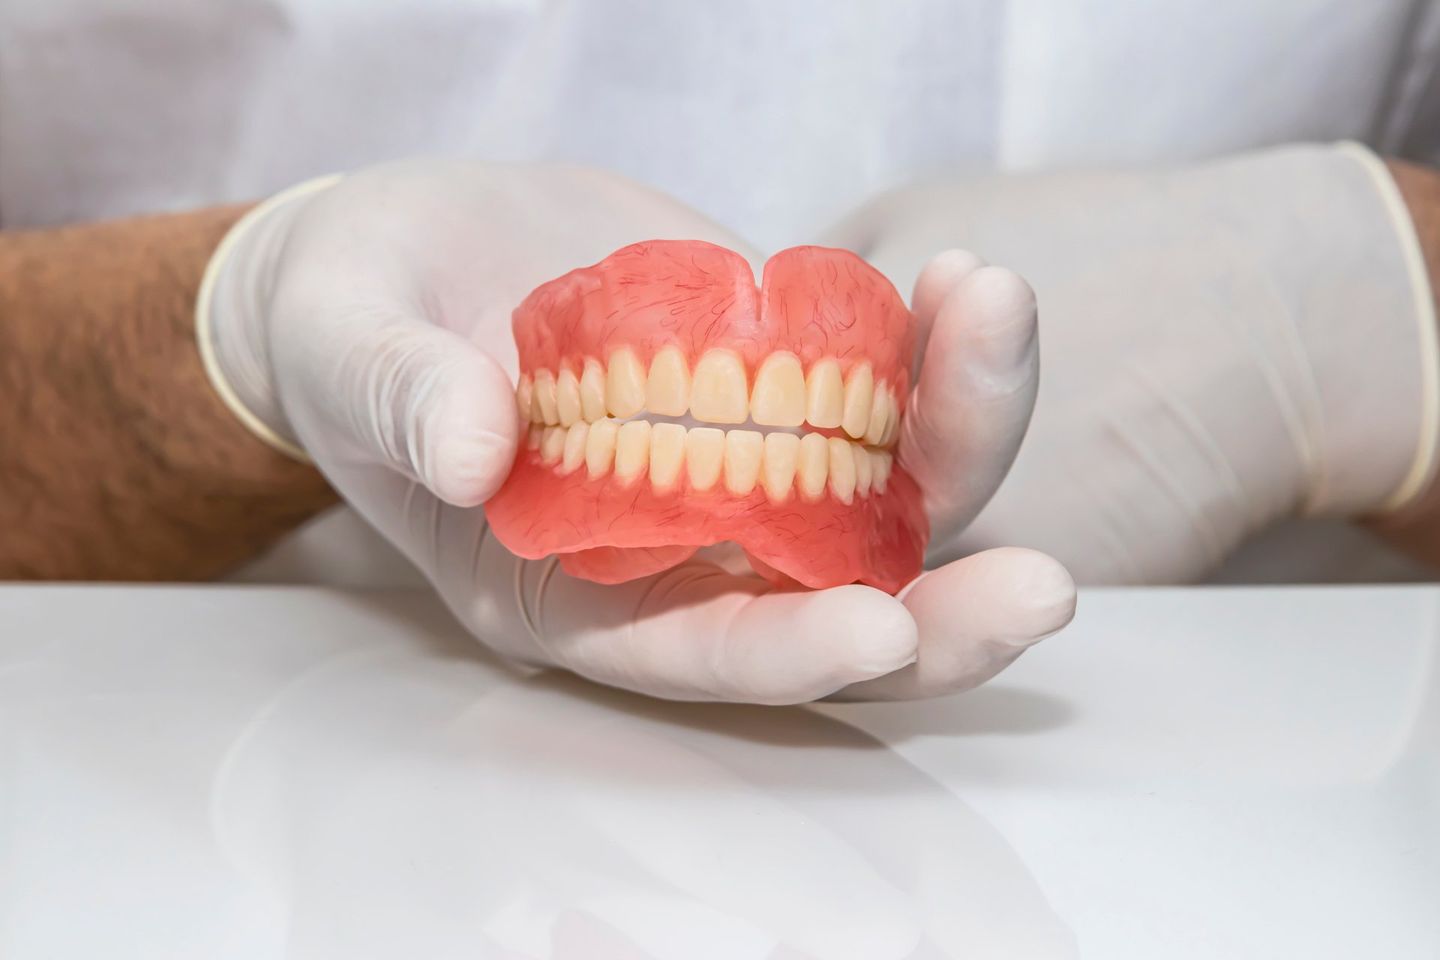 False Teeth Prosthesis - Dental Treatments in Port Macquarie, NSW